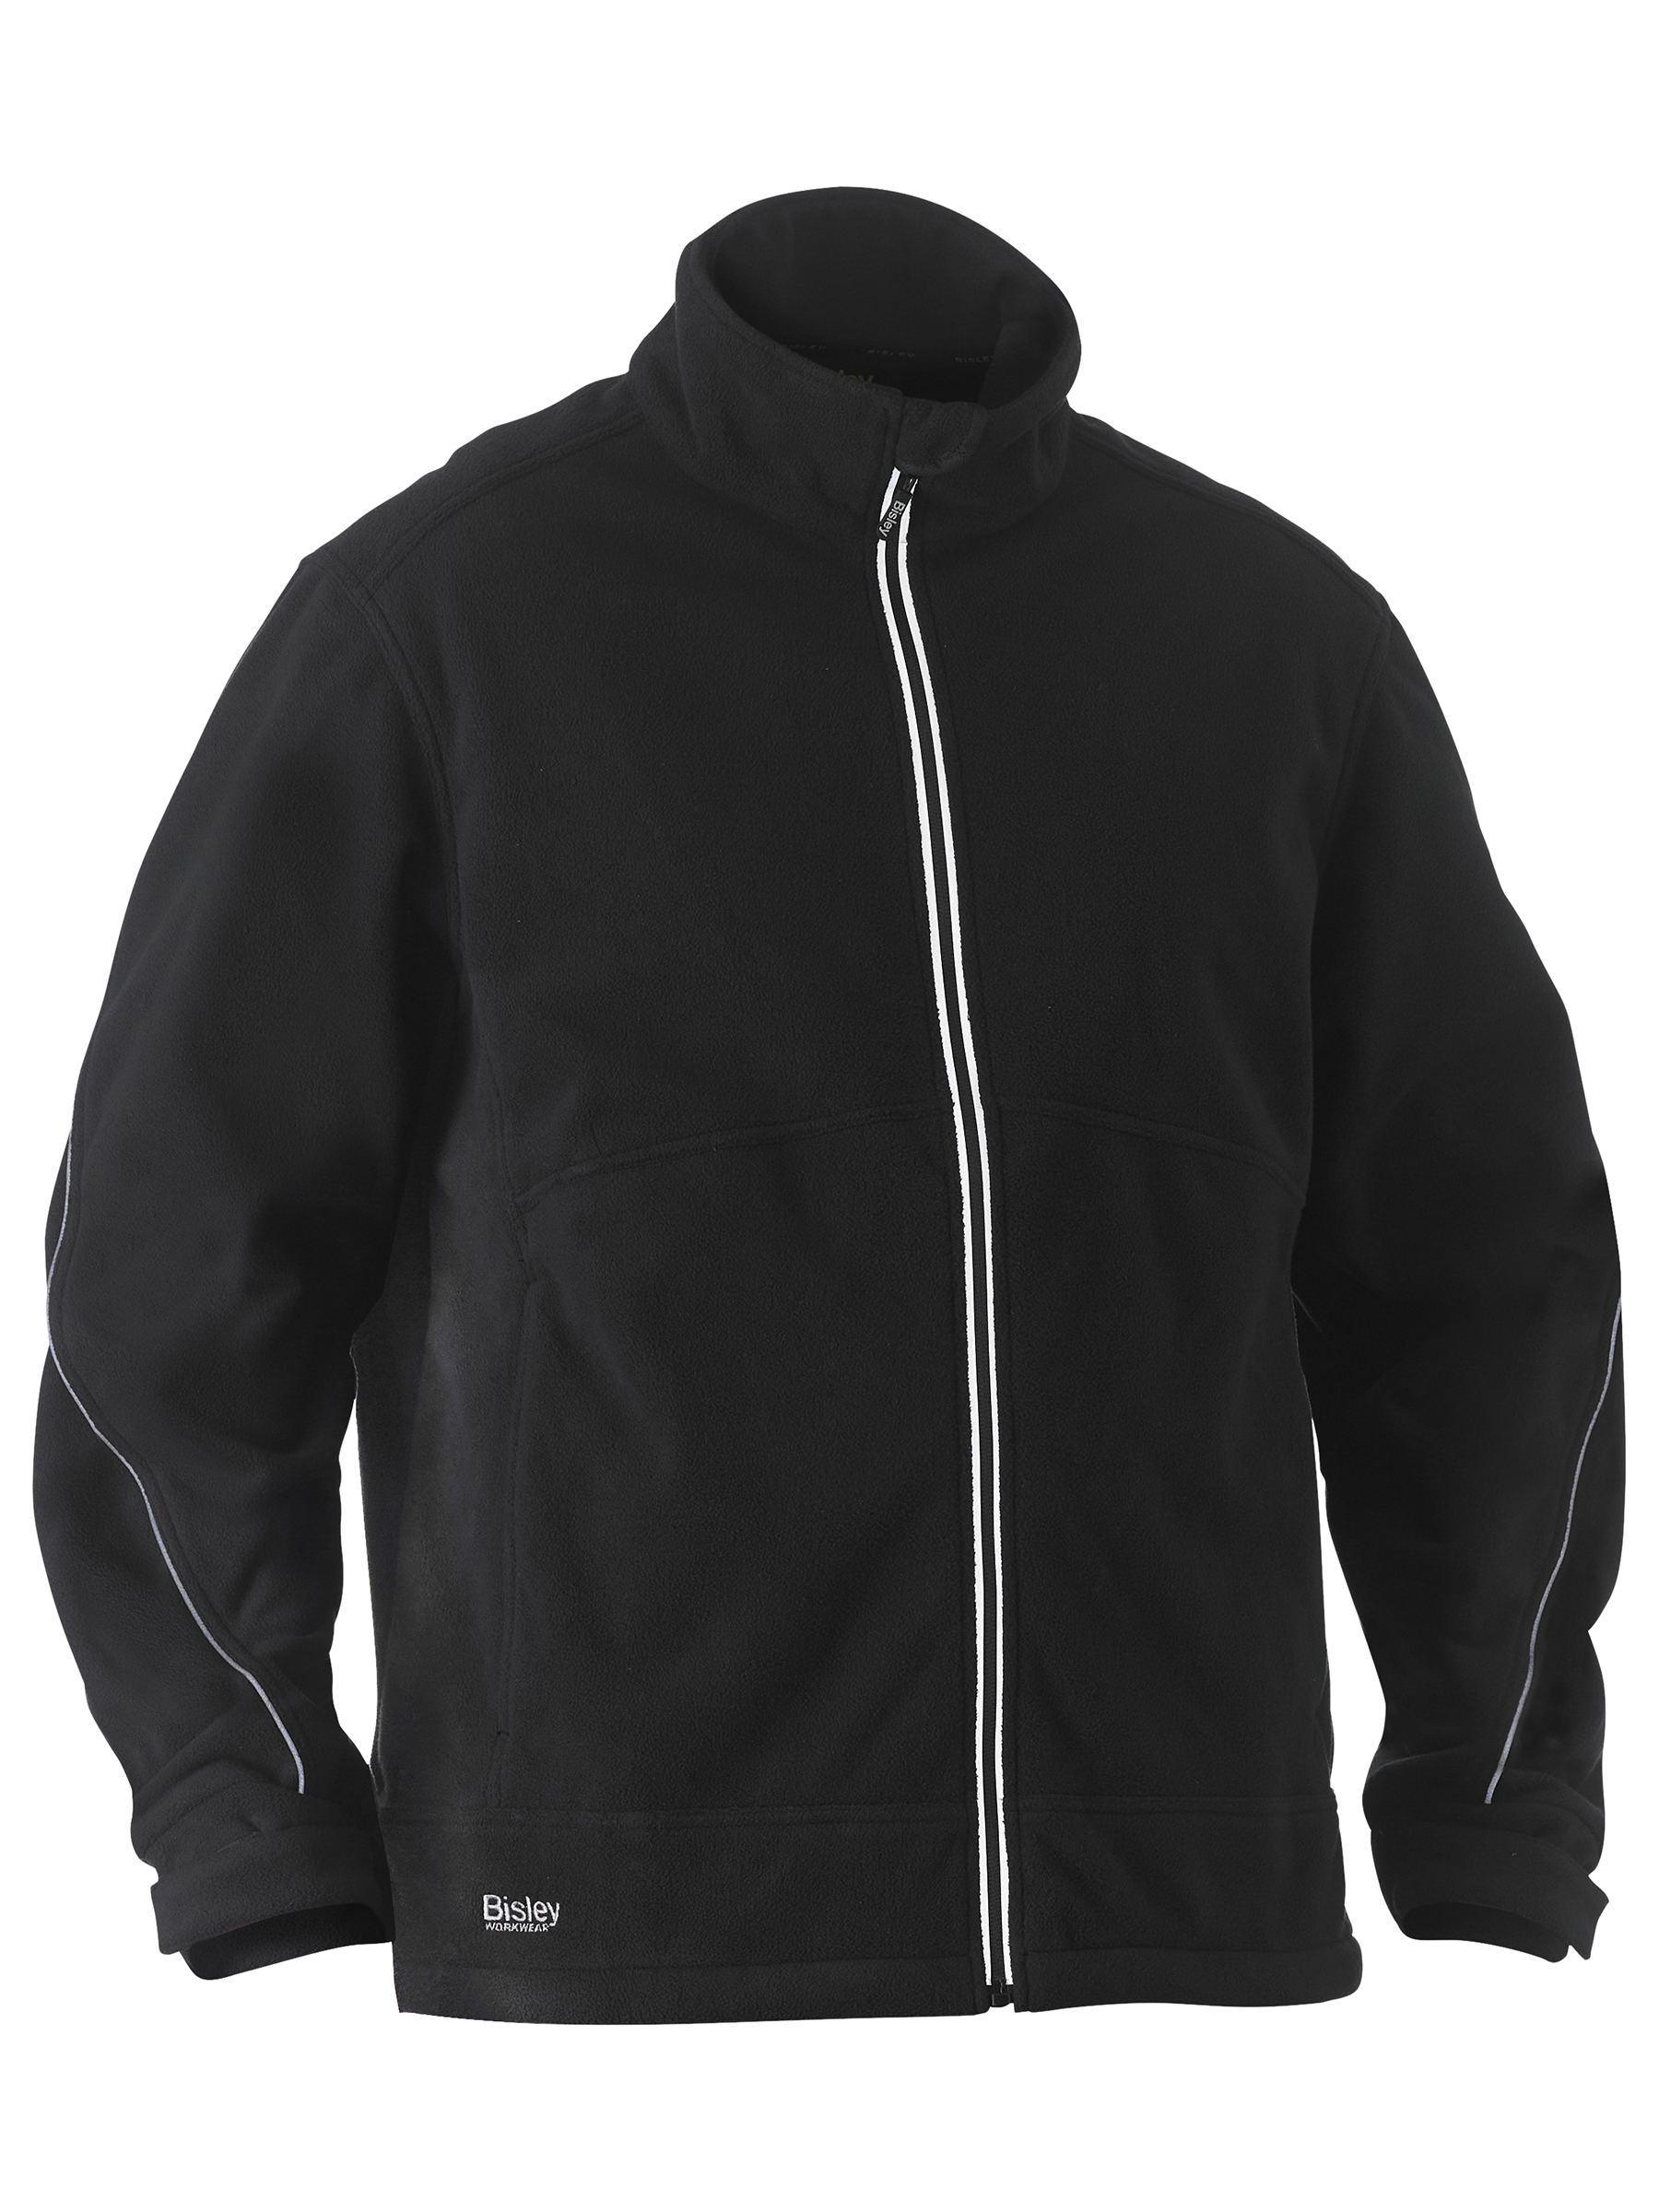 Bonded micro fleece jacket with reflective accent - BJ6771 - Bisley ...